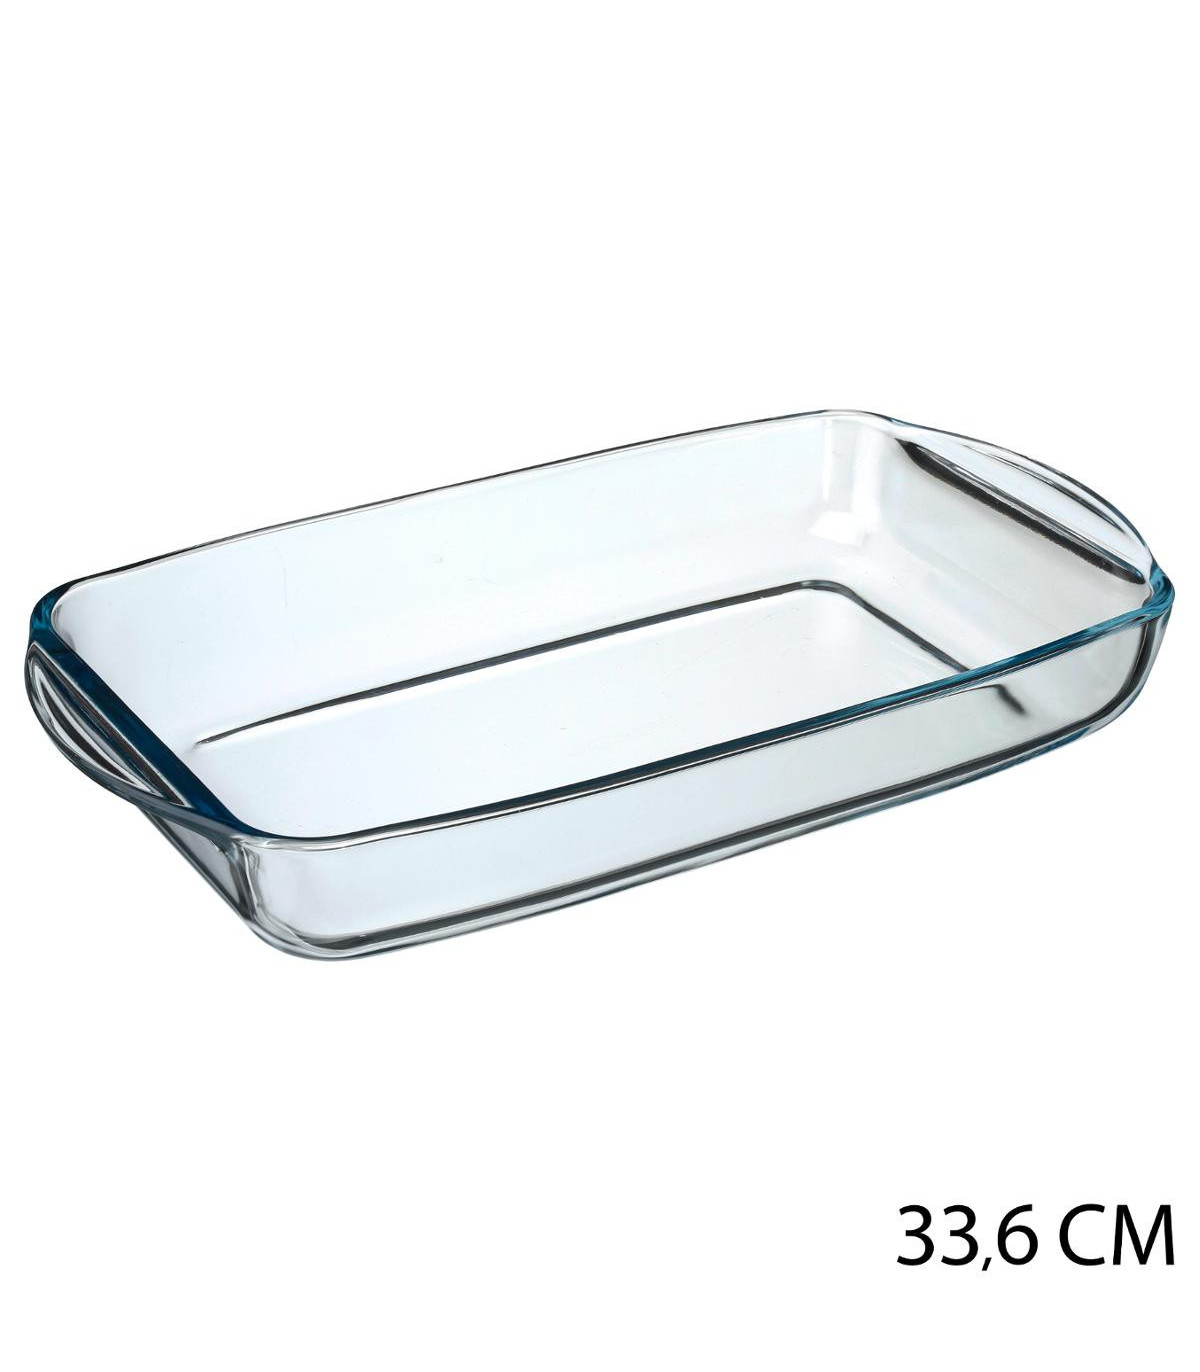 plat-rectangle-en-verre-34x19 (2)